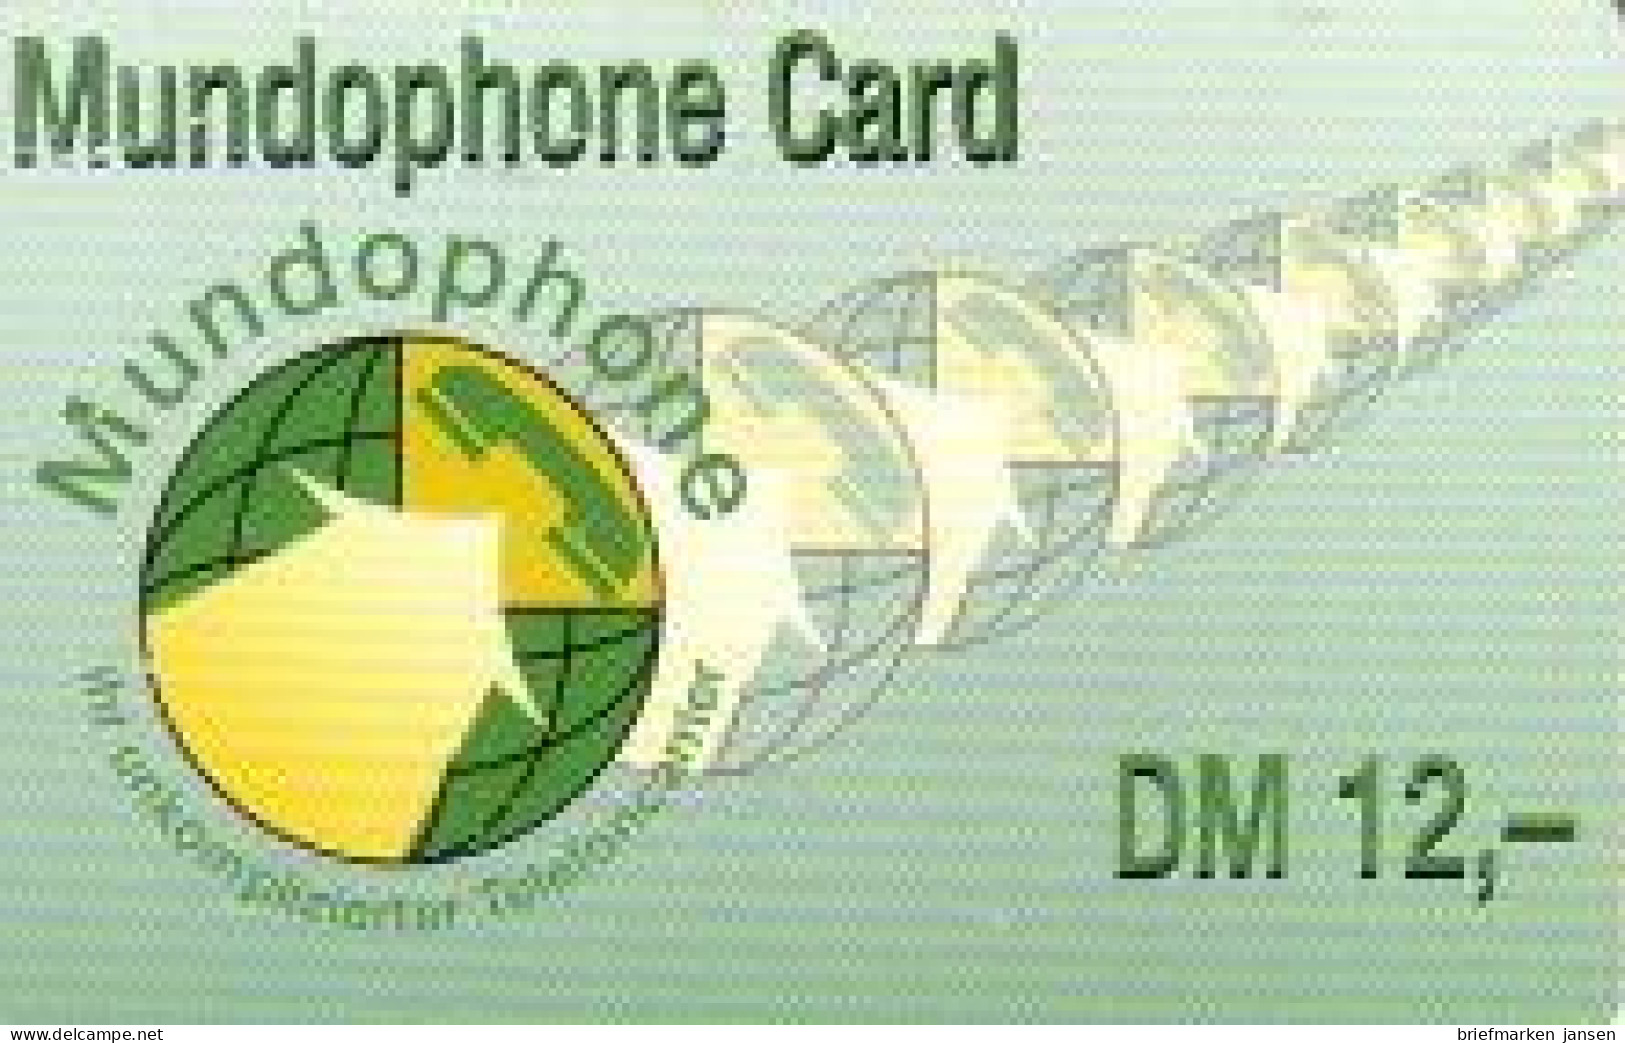 Calling Card, Mundophone, Grafik Telefonhörer, DM 12,- - Unclassified